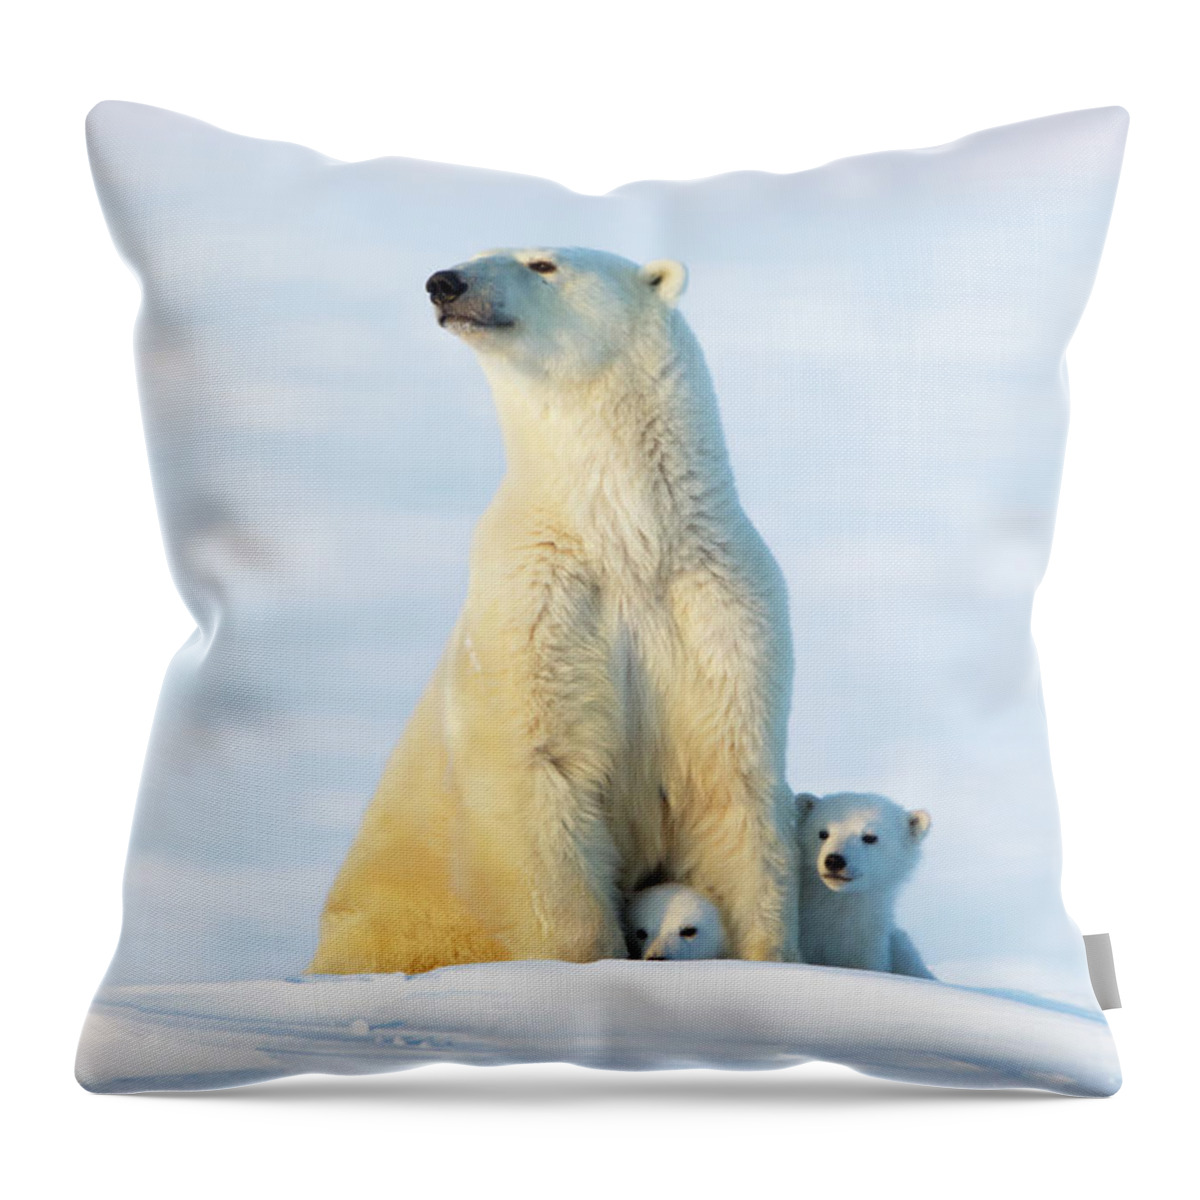 Bear Cub Throw Pillow featuring the photograph Polar Bear Ursus Maritimus Sow And Cubs by Richard Wear / Design Pics